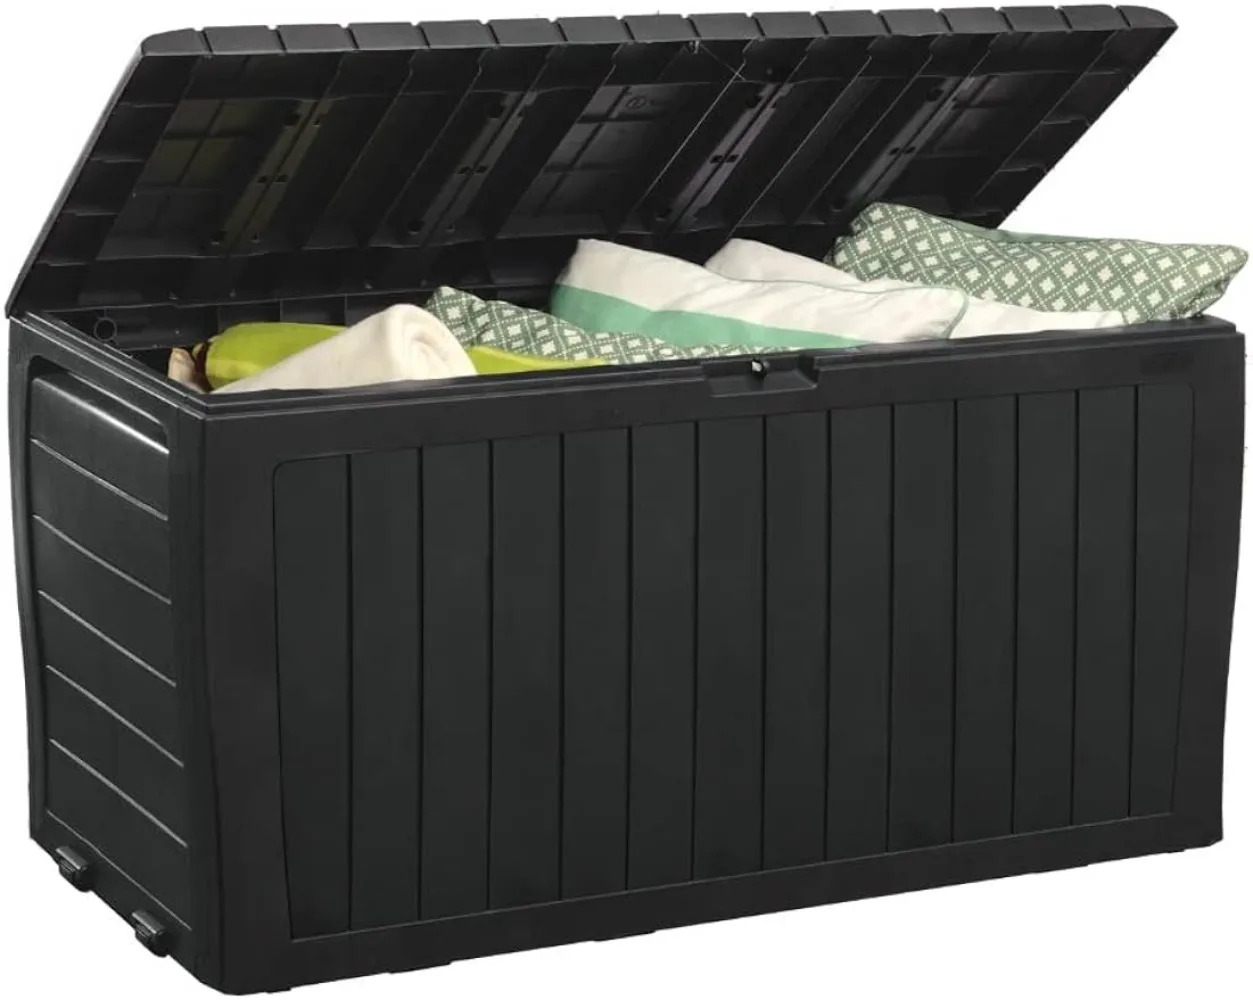 

Marvel Plus 71 Gallon Resin Deck Box-Organization and Storage for Patio Furniture Outdoor Cushions, Throw Pillows, Garden